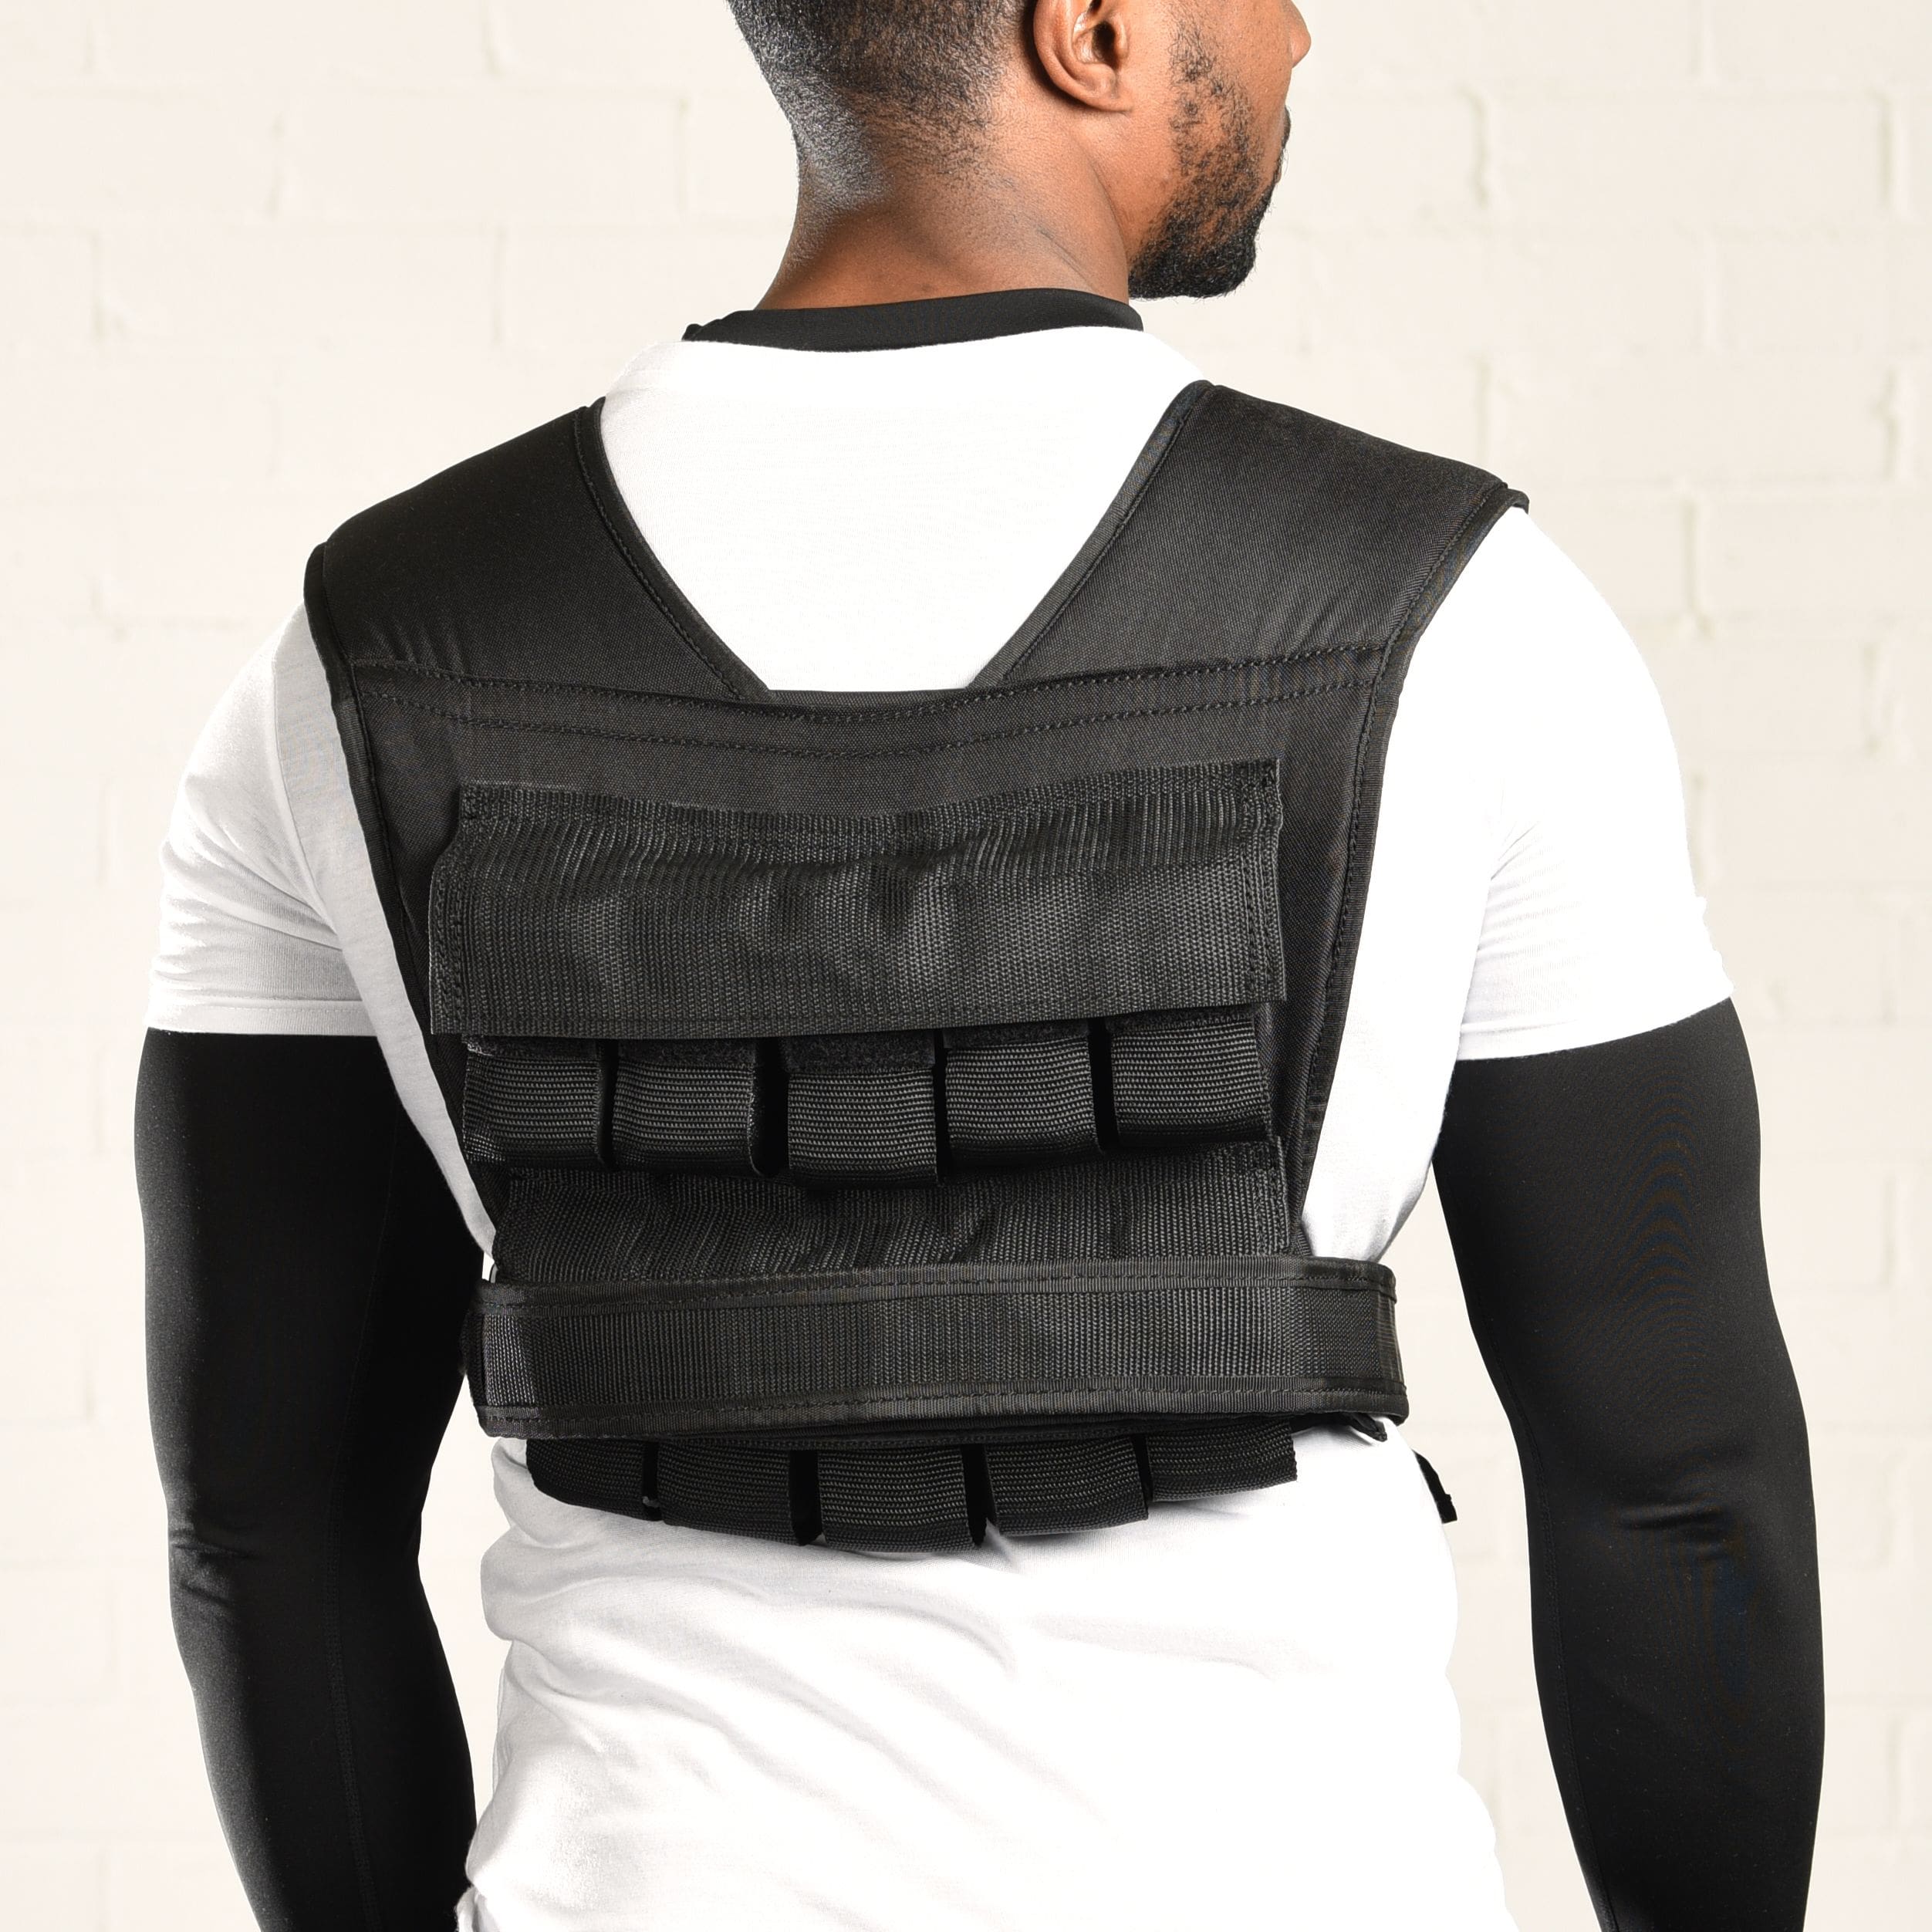 Mirafit Adjustable Weighted Vest Set